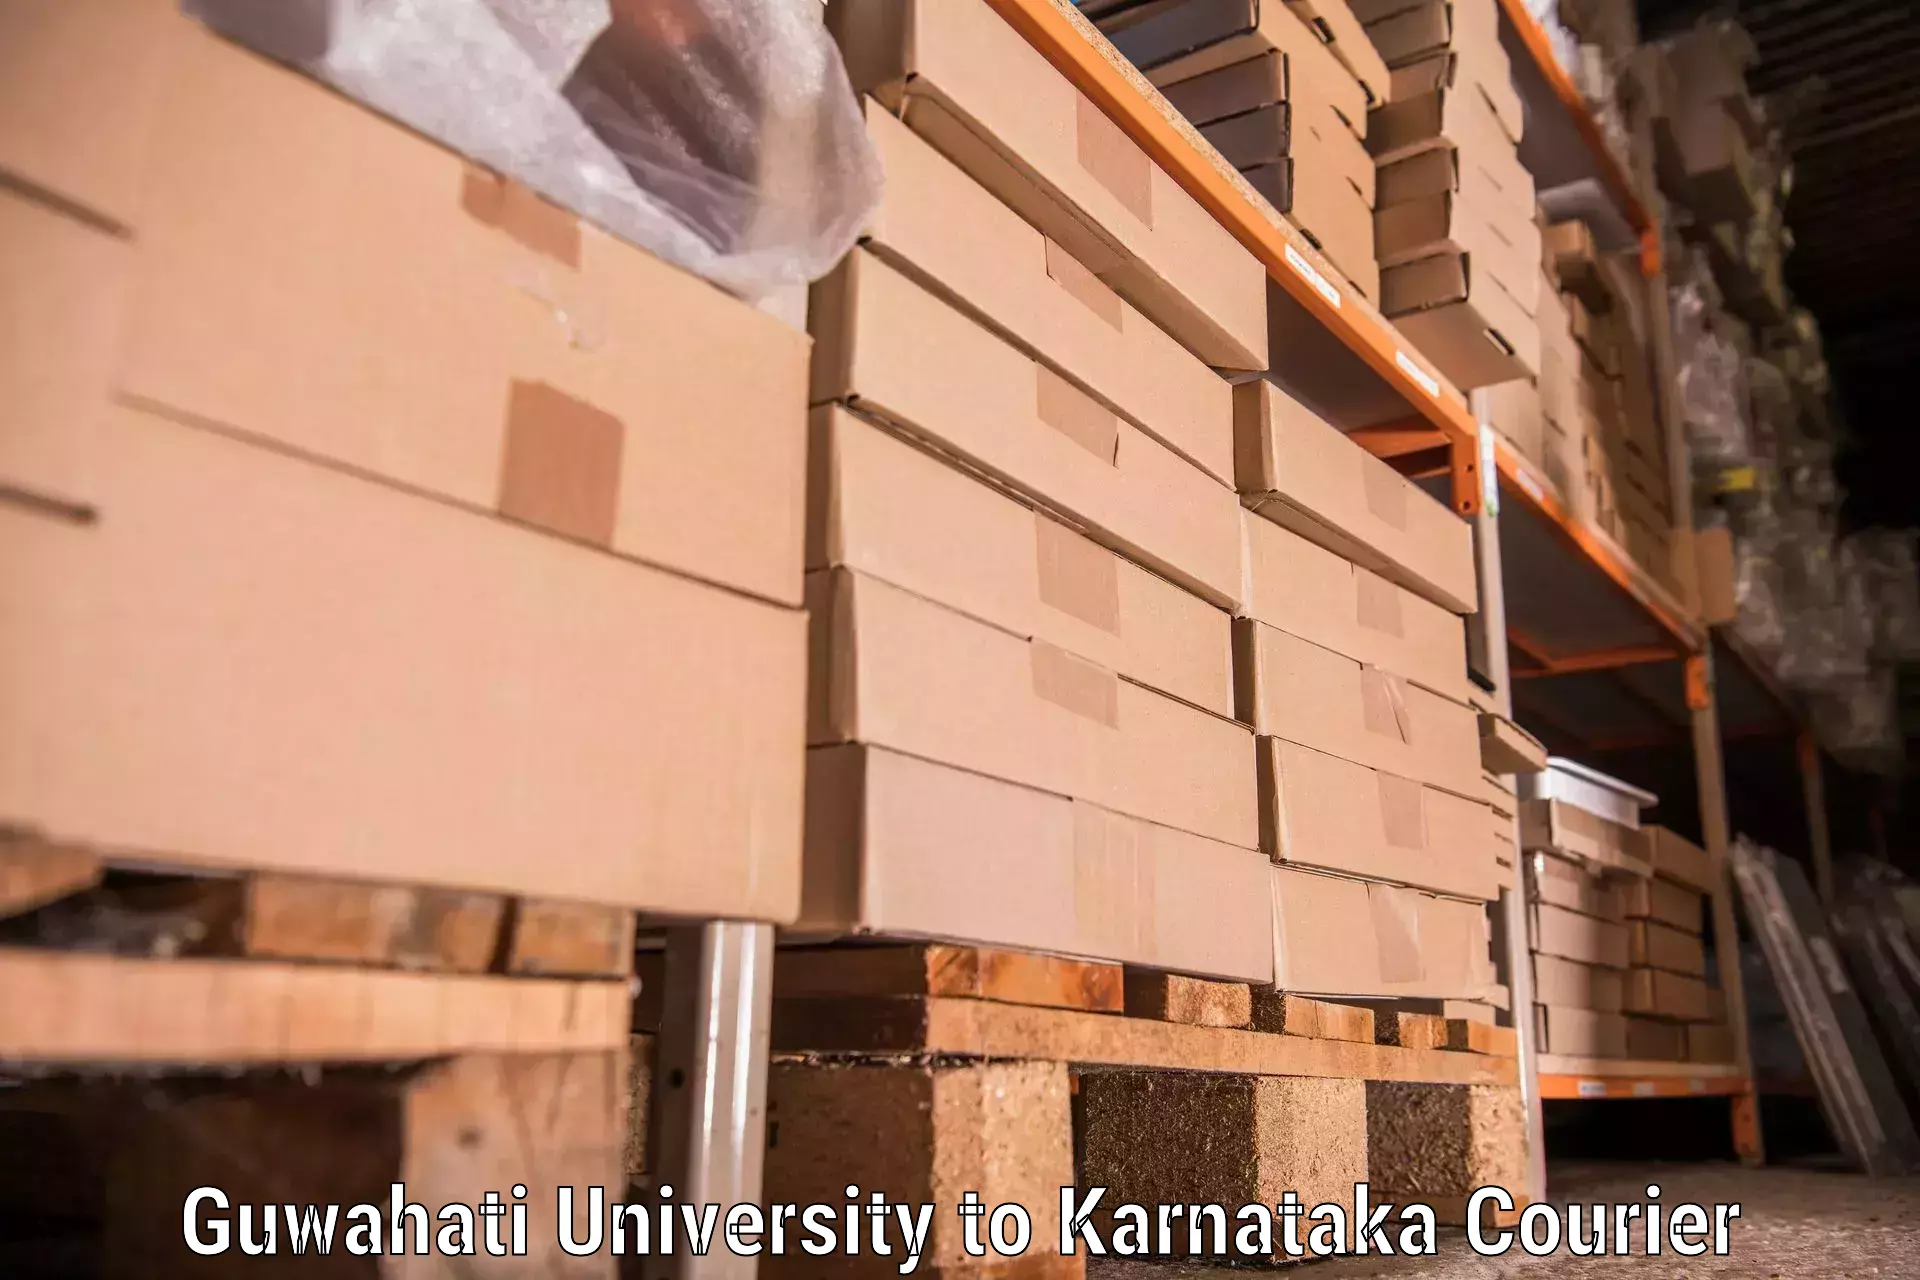 Furniture moving assistance Guwahati University to Mysore